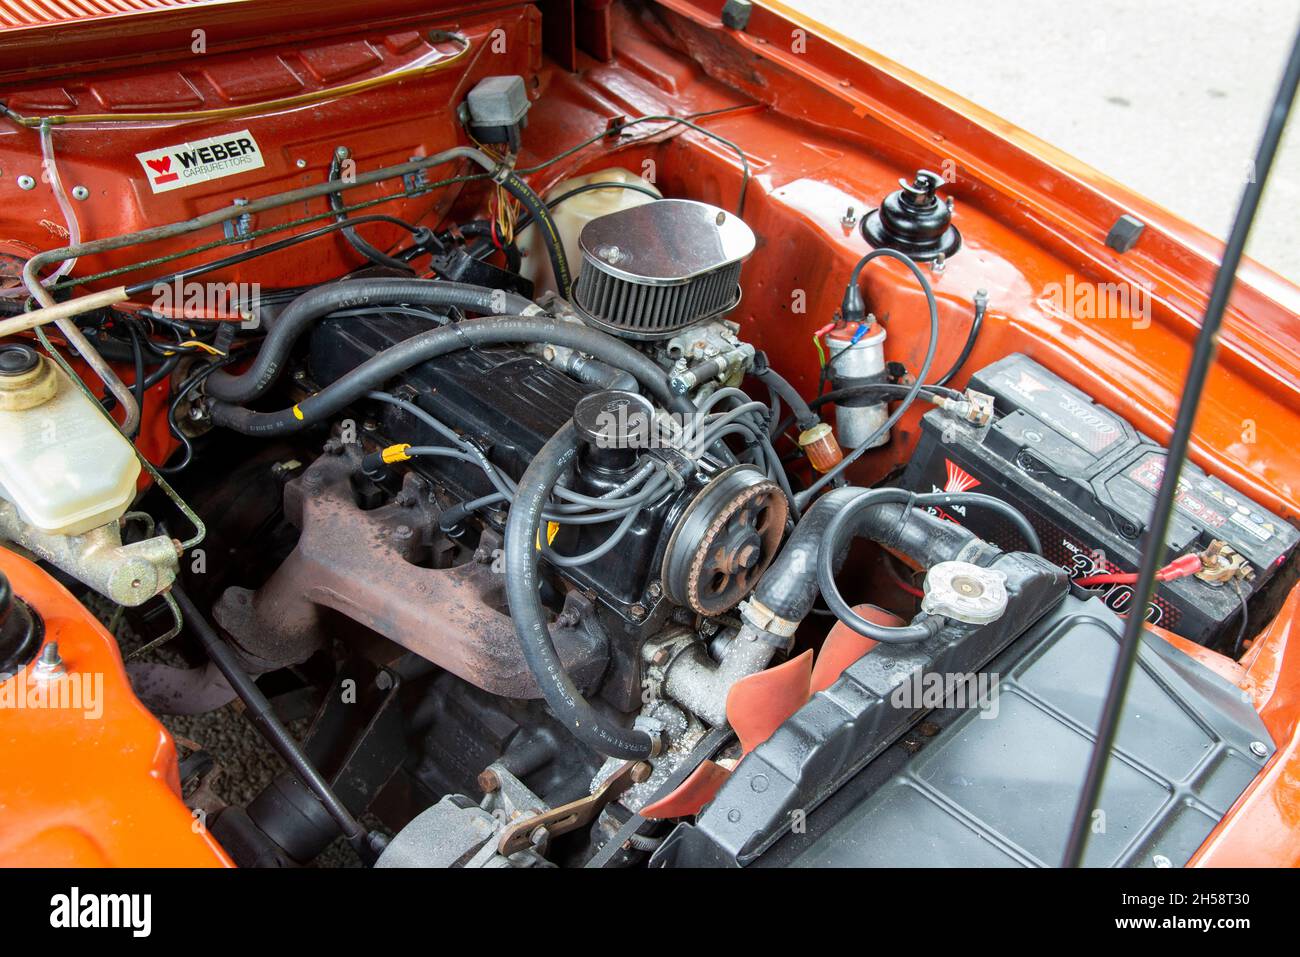 Ford capri engine -Fotos und -Bildmaterial in hoher Auflösung – Alamy